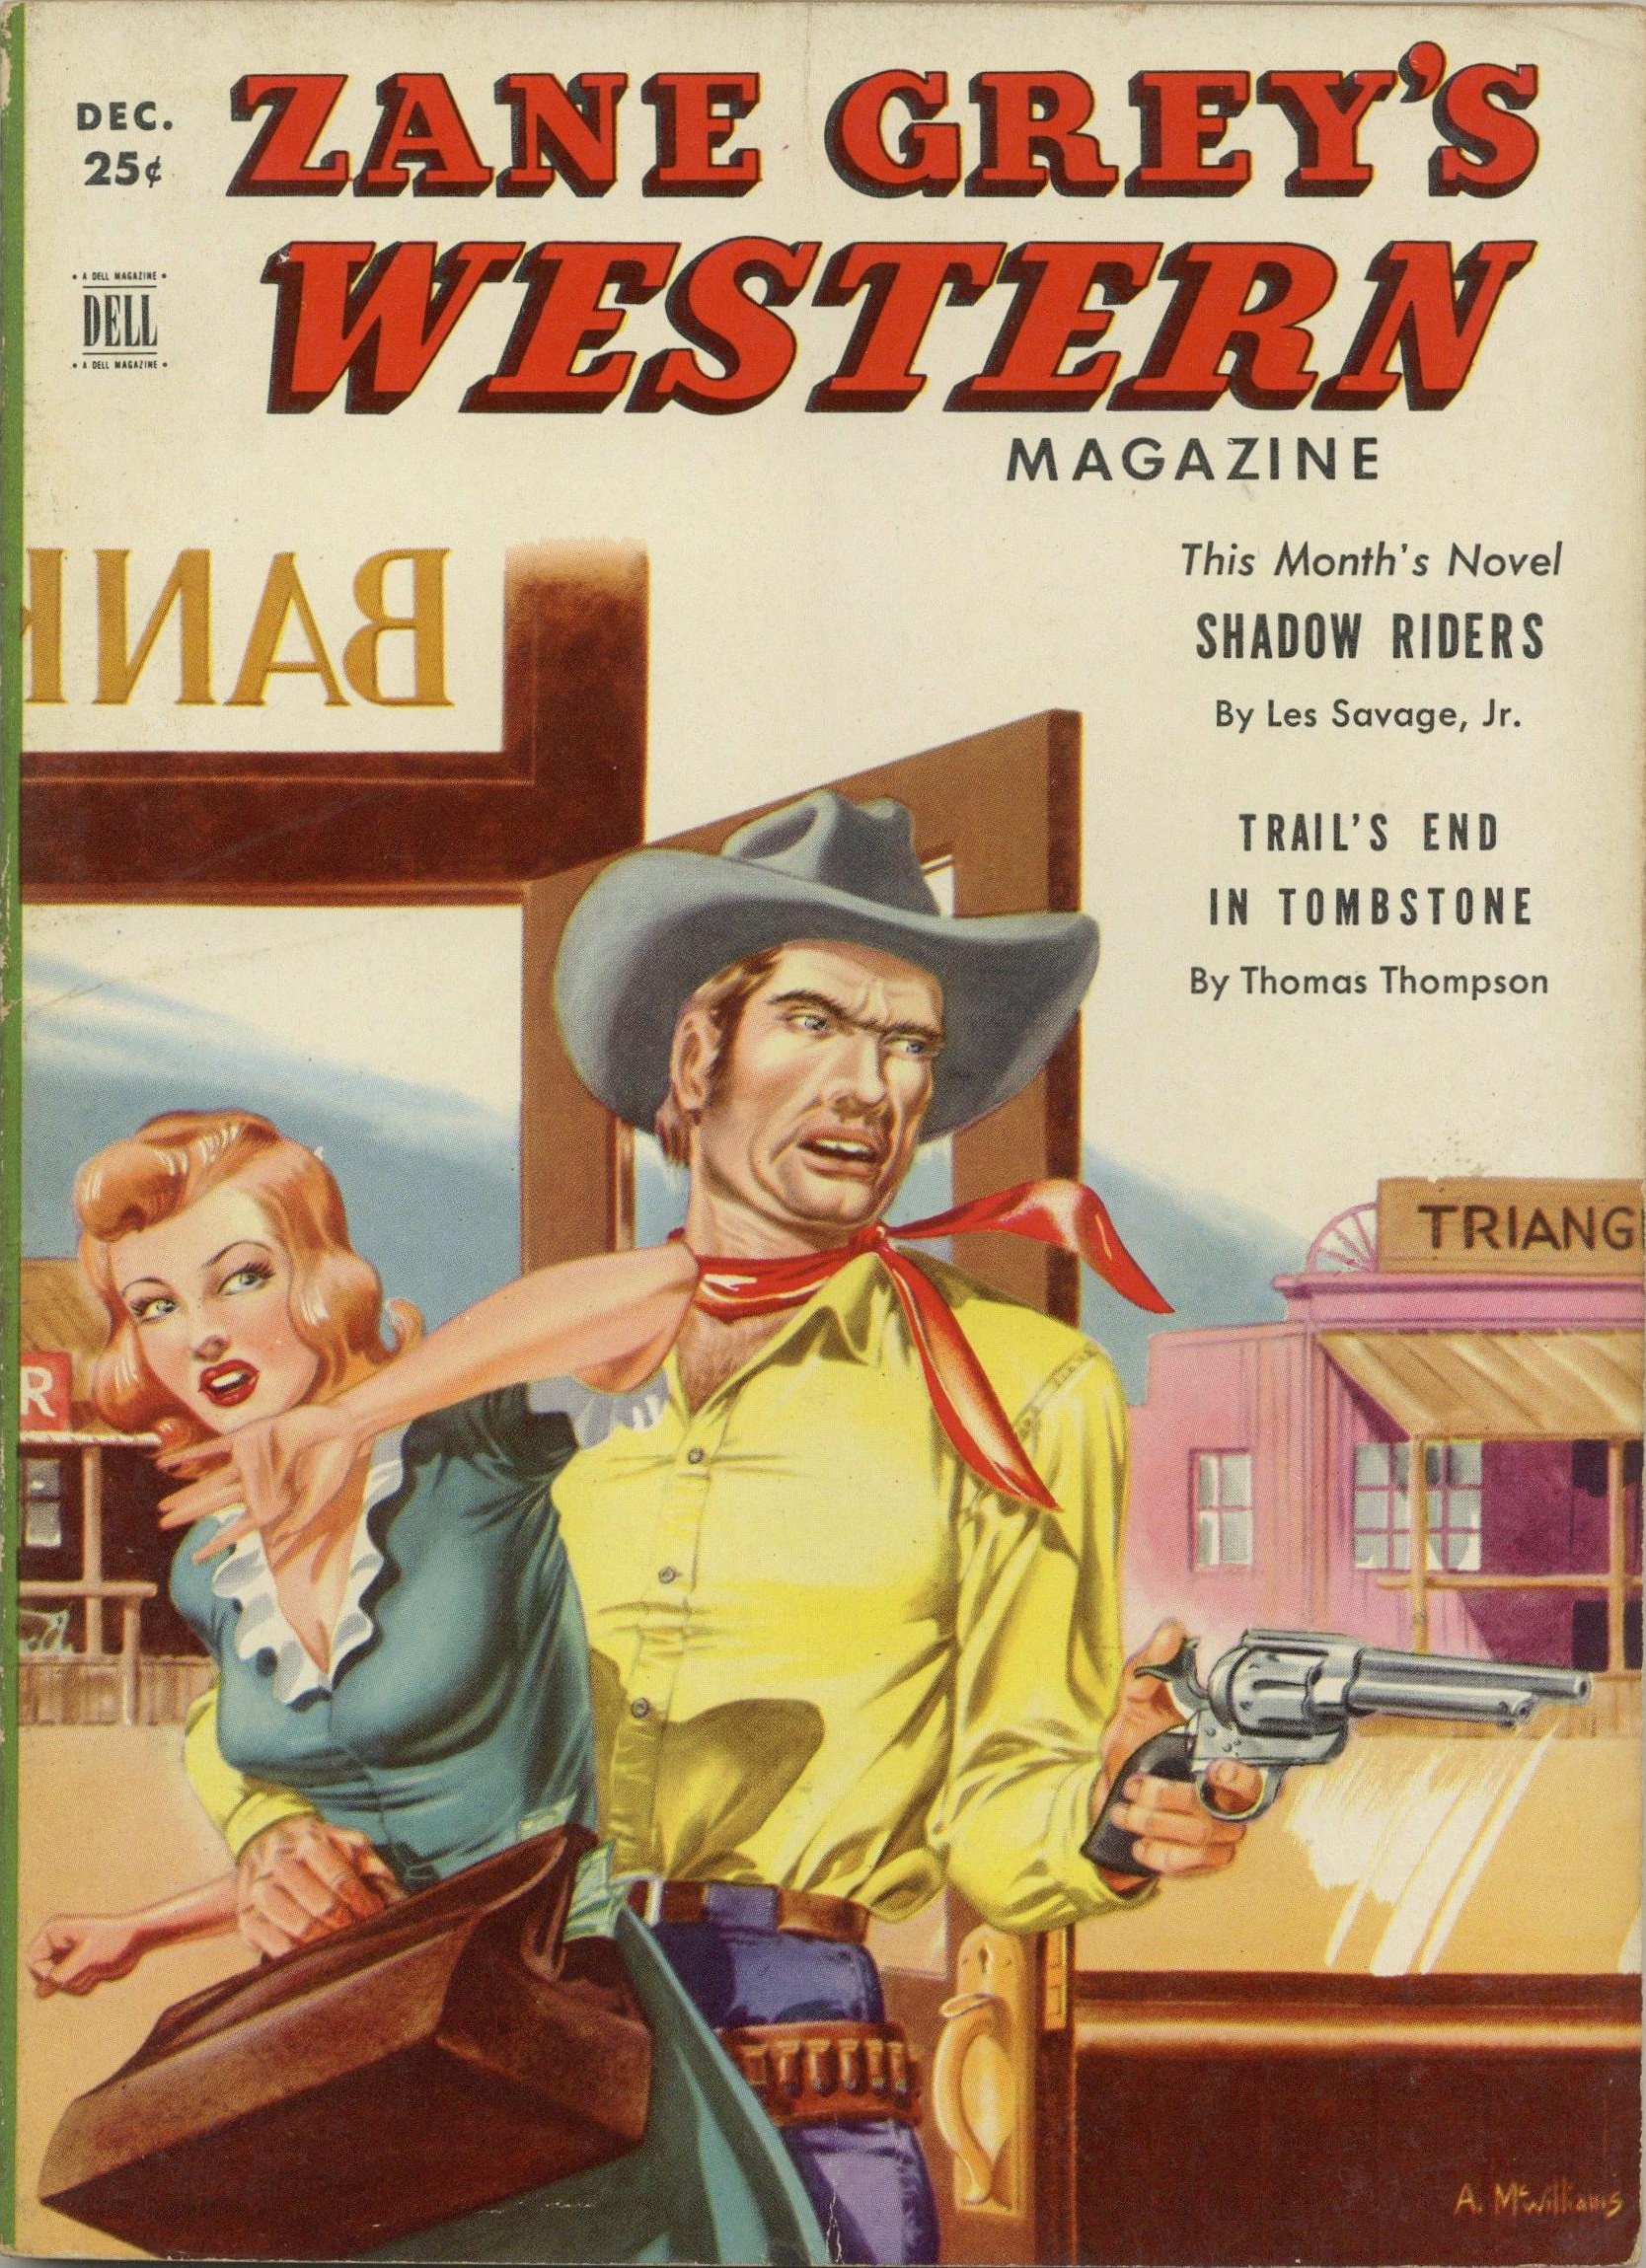 Zane Grey's Western Magazine December 1950